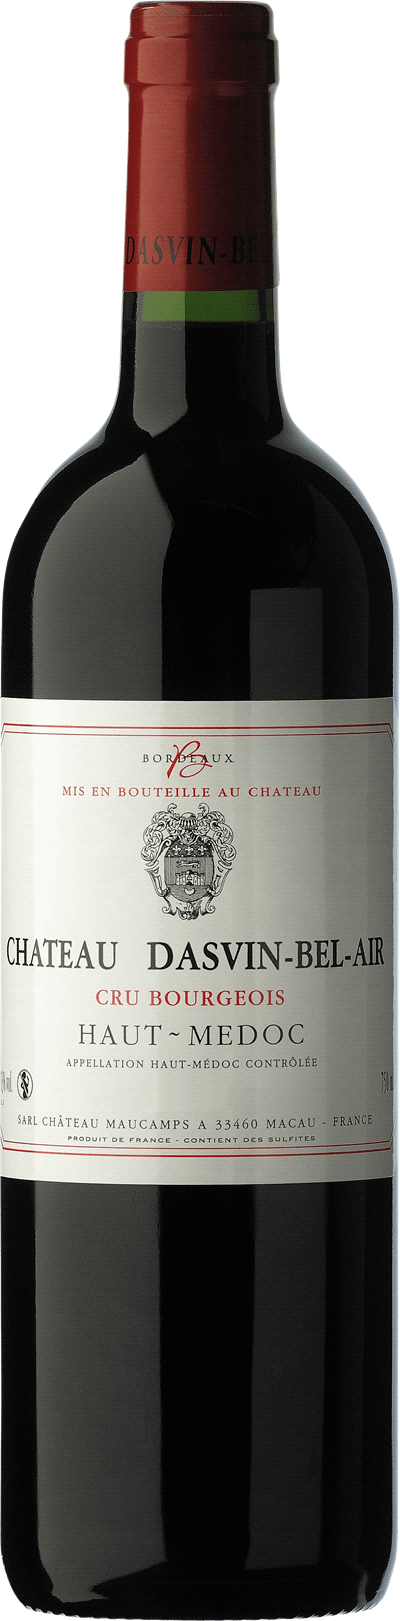 Château Dasvin Belair Cru Bourgeoise, 2016